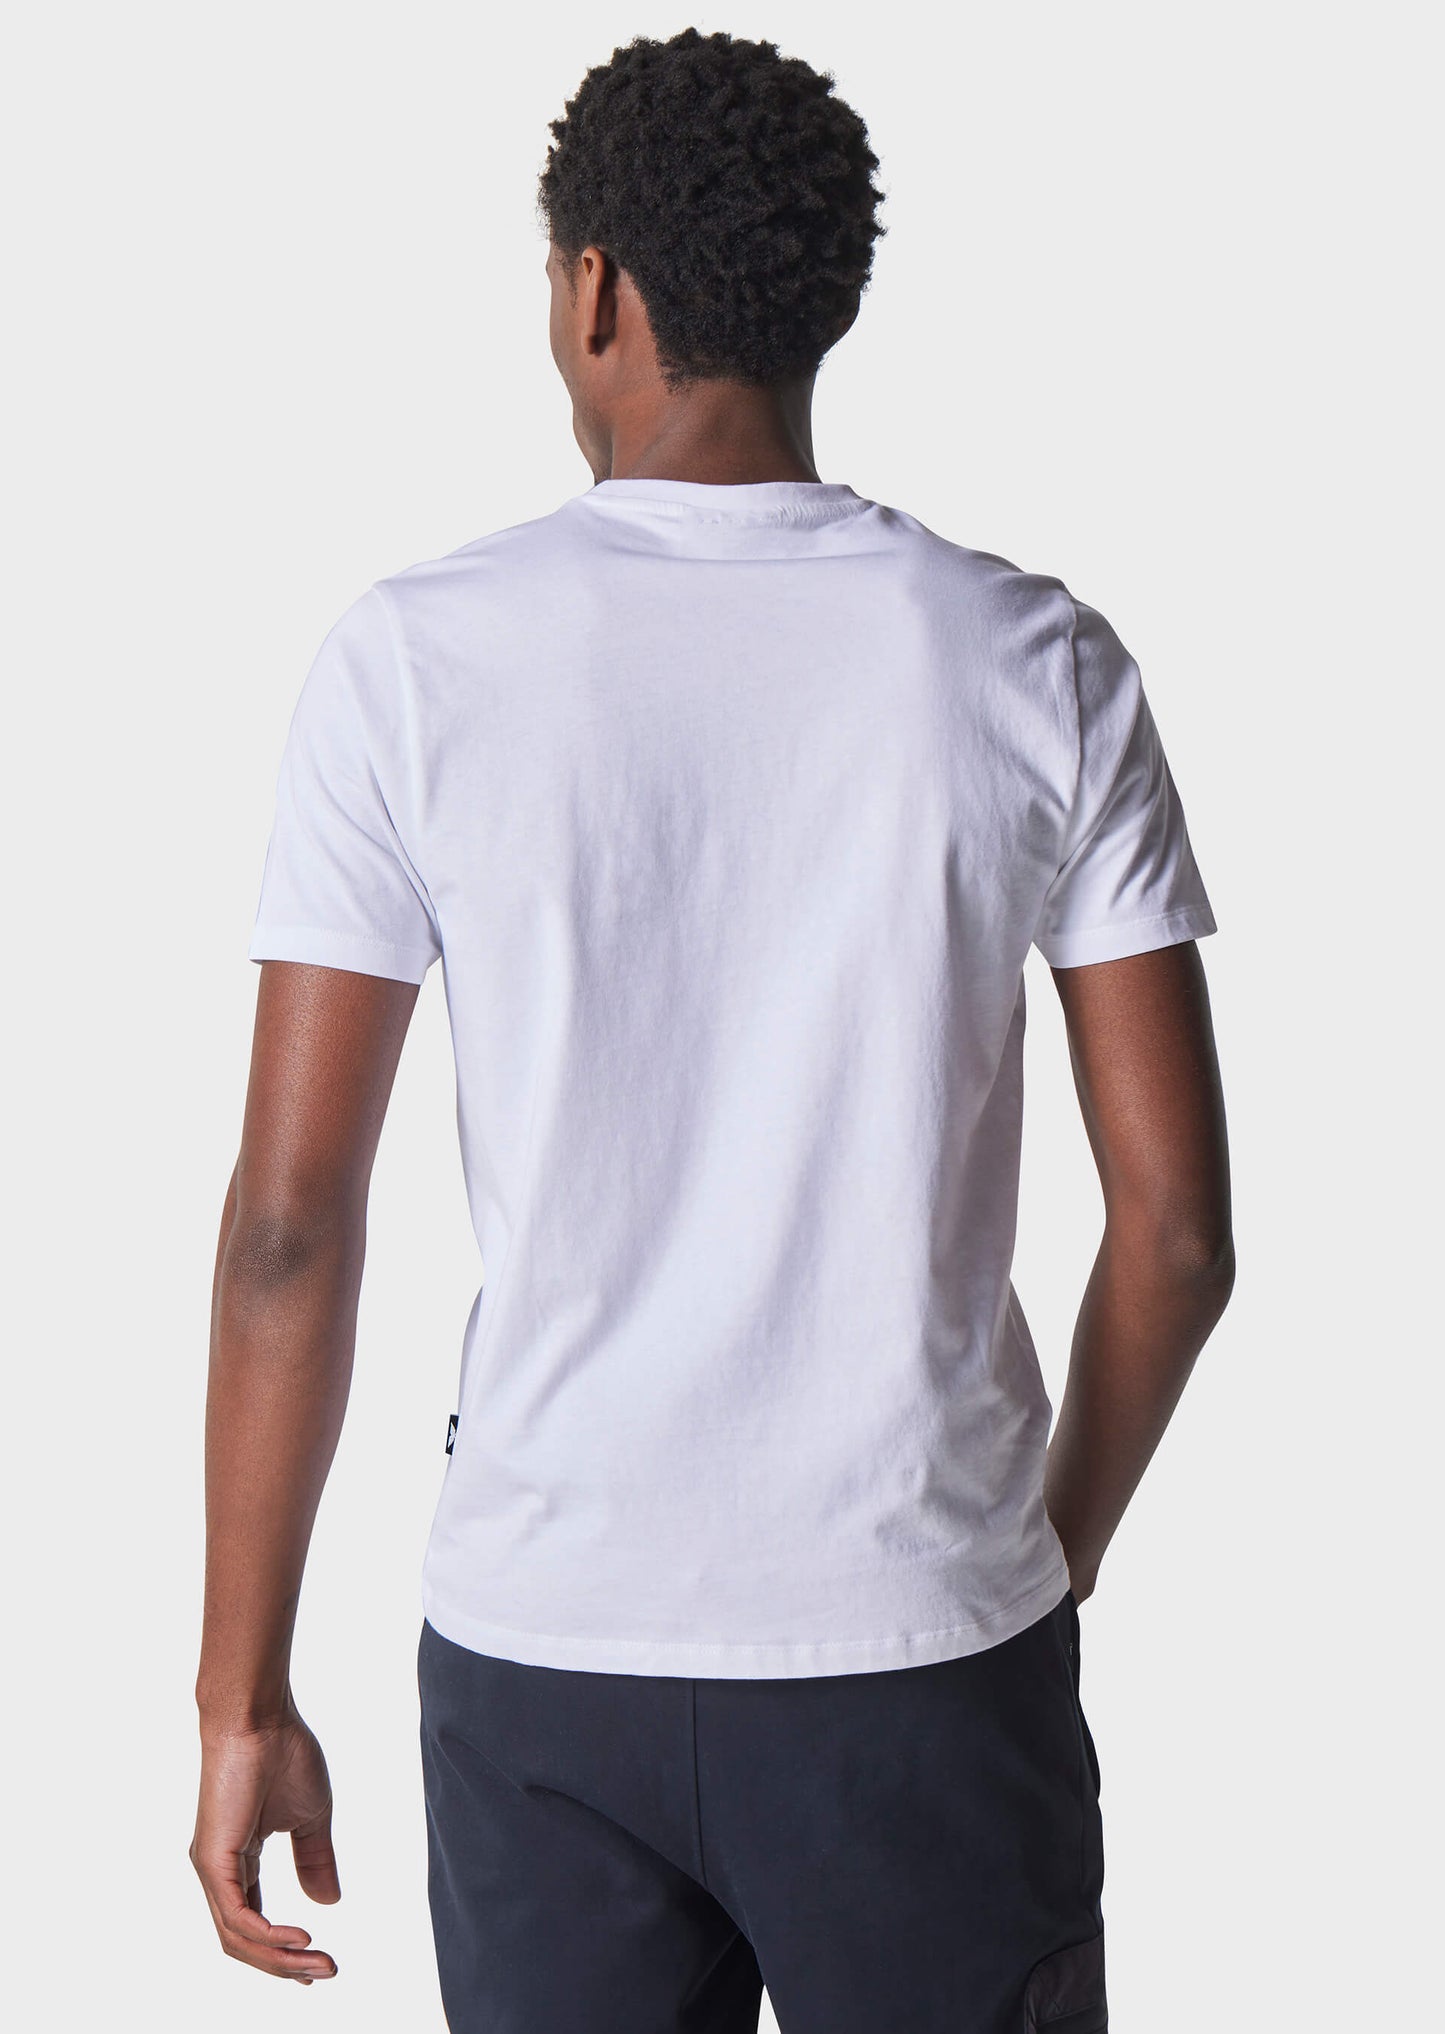 Danton Pure White T-Shirt